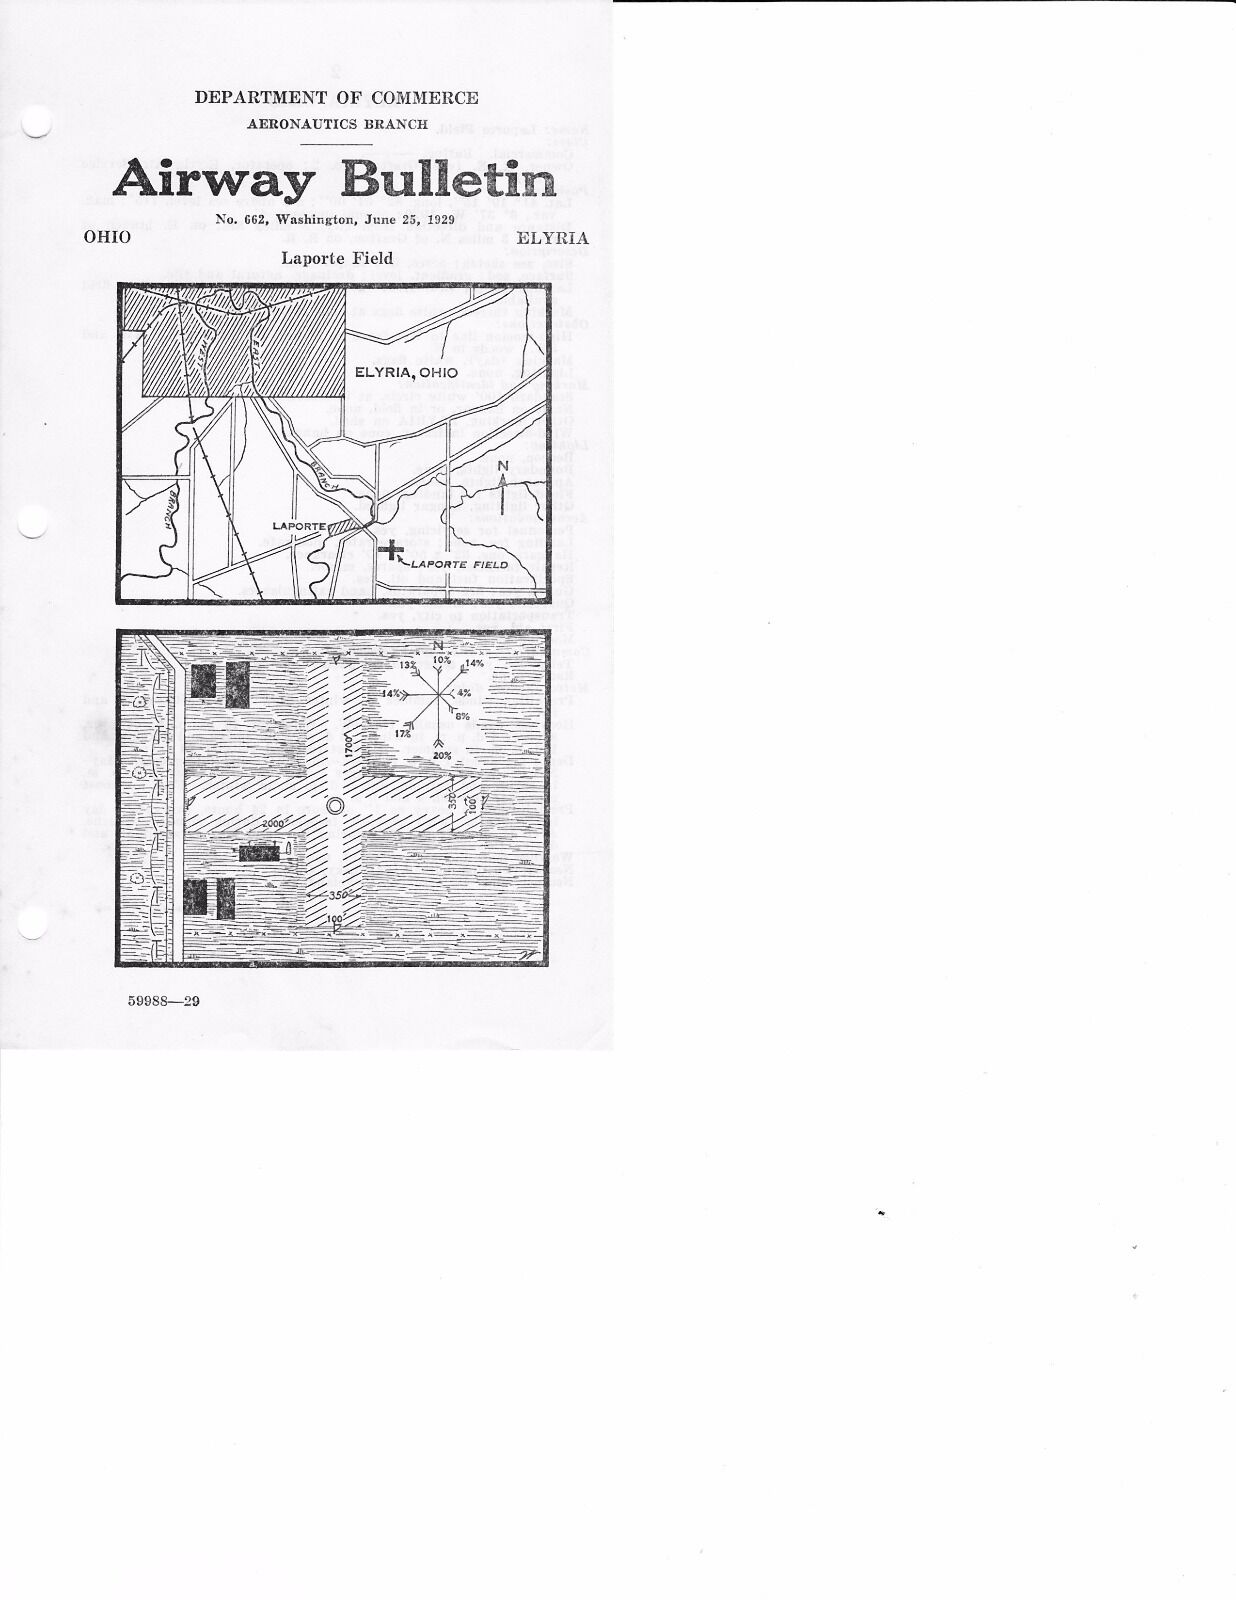 Airway Bulletin No 662, Laporte Field, Elyria Ohio, from 1929.